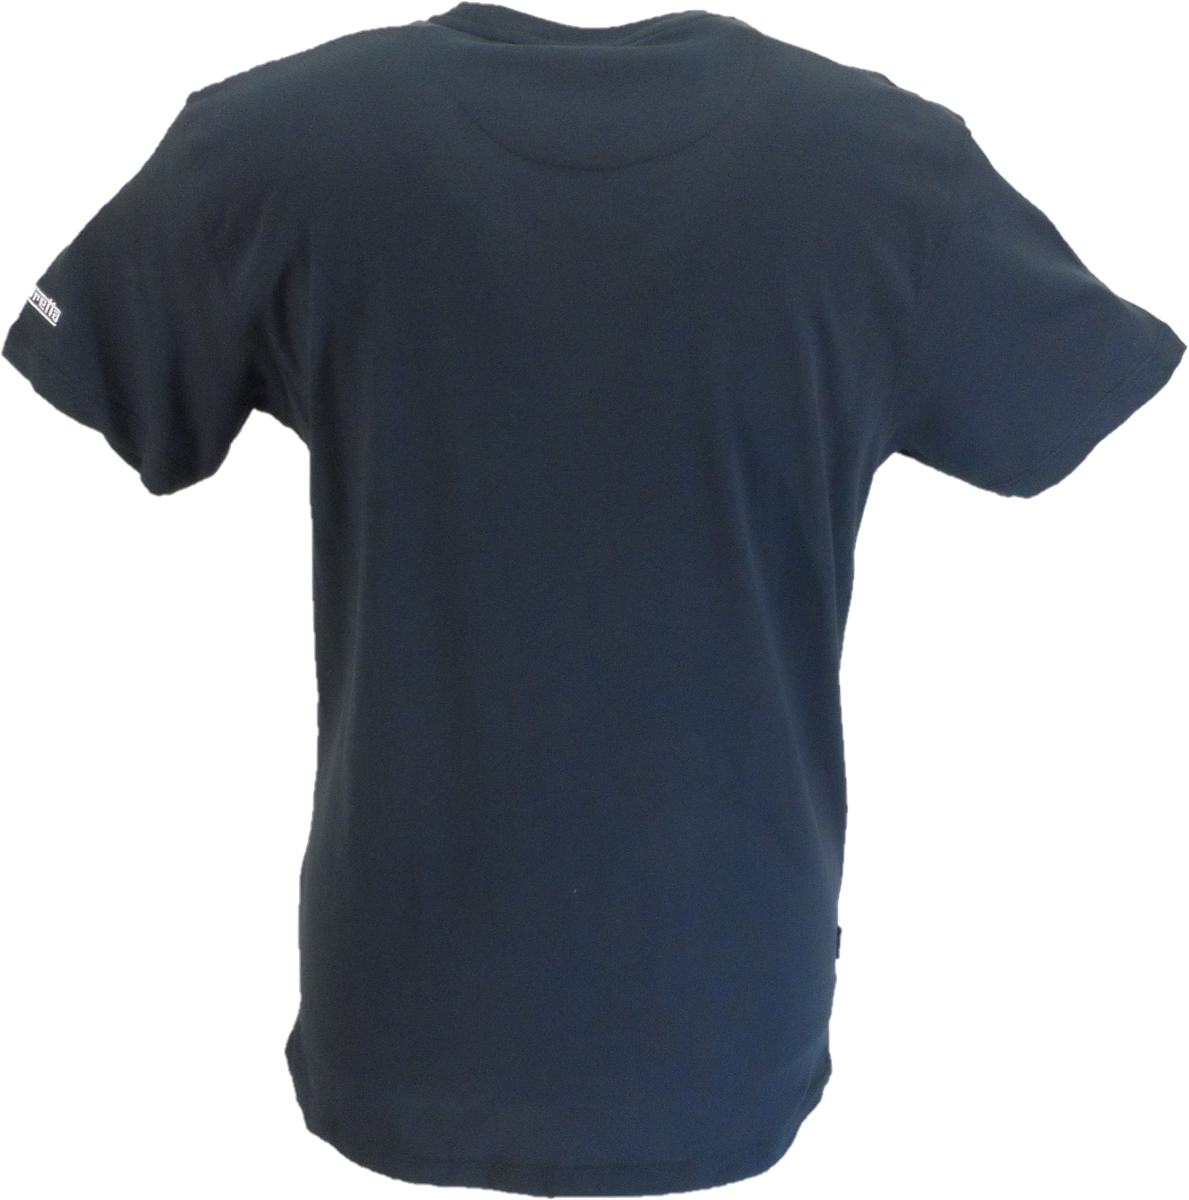 Lambretta Mens Navy Blue Founded 1947 T-Shirt